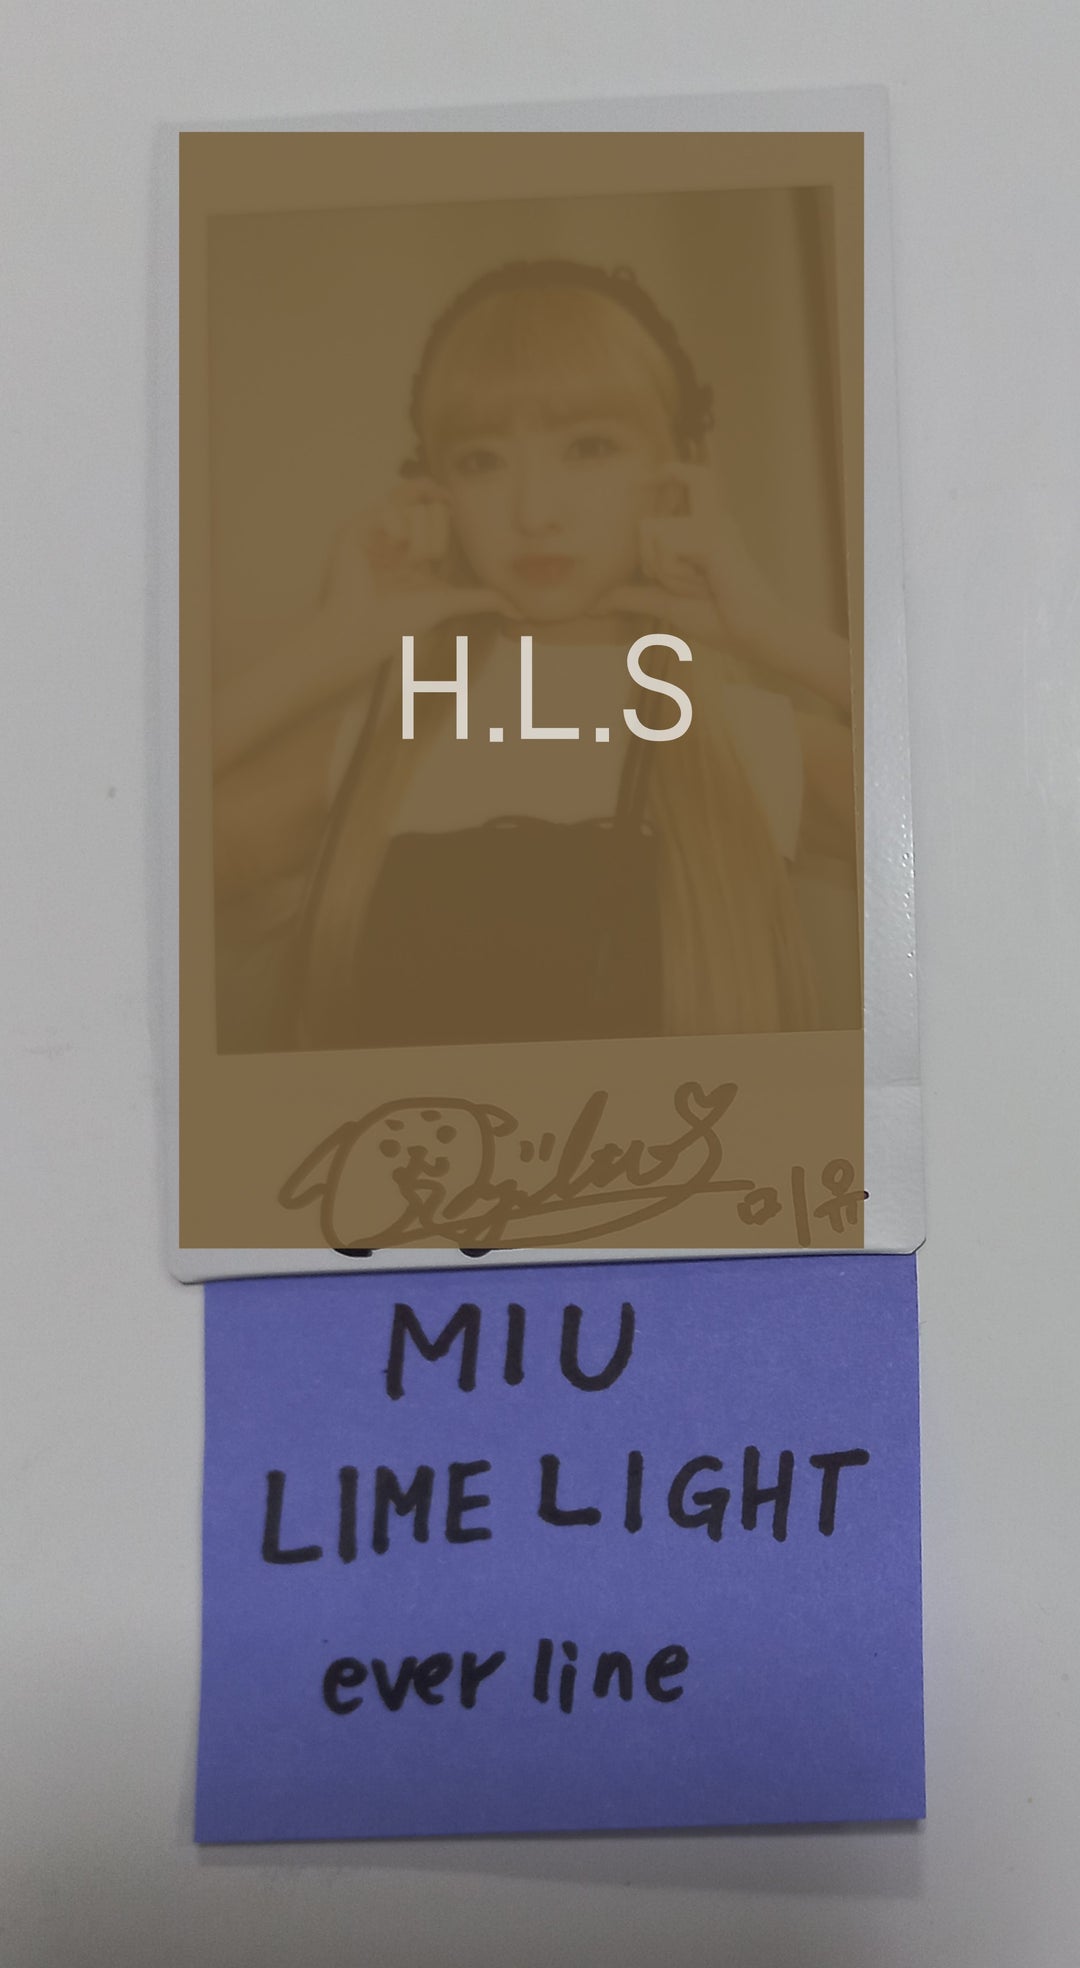 MIU (Of LIMELIGHT) "Last Dance" - Hand Autographed(Signed) Polaroid [24.1.22]